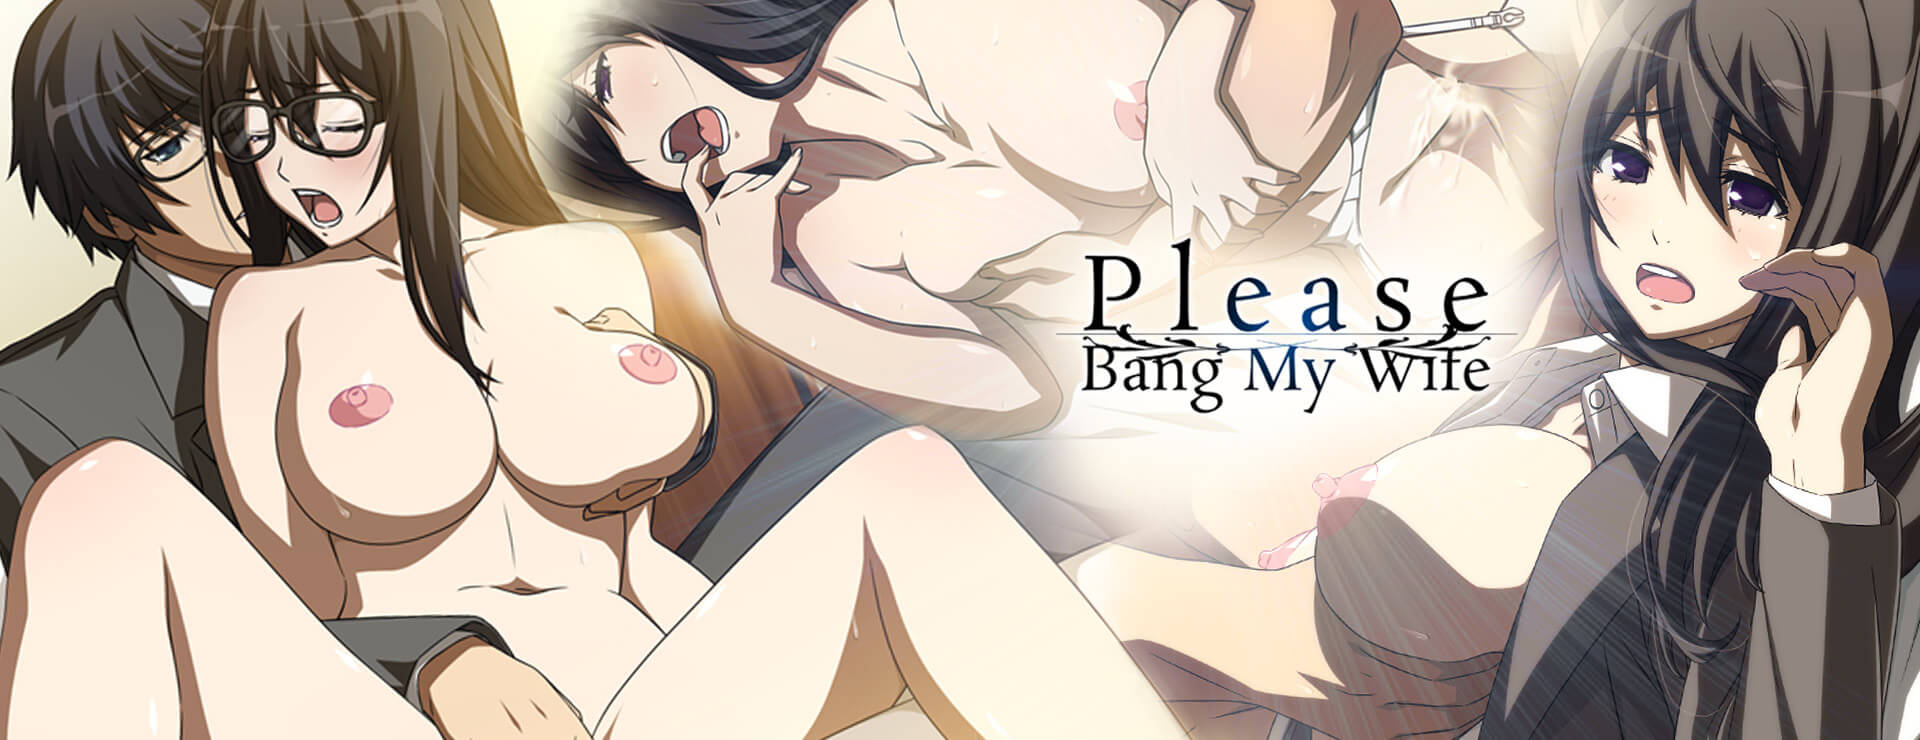 Please Bang My Wife - Japanisches Adventure Spiel